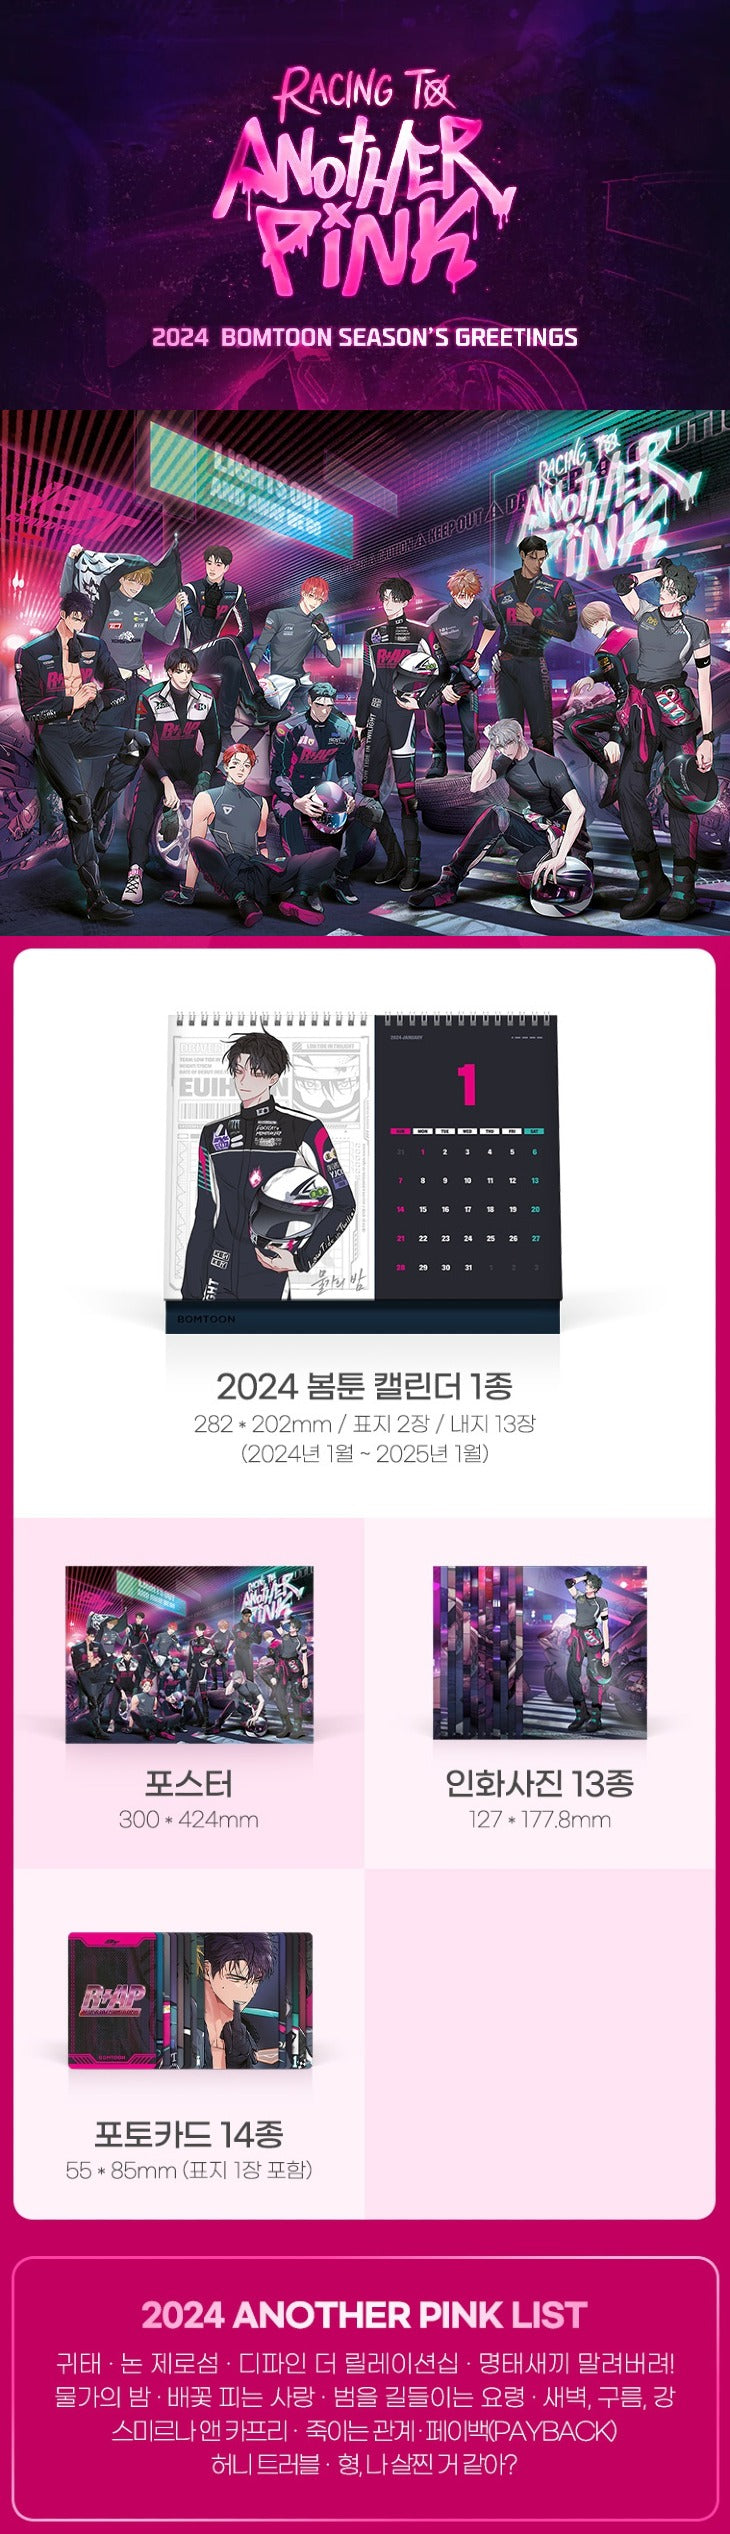 bomtoon-2024-season-s-greetings-racing-to-another-pink-calendar-koonbooks